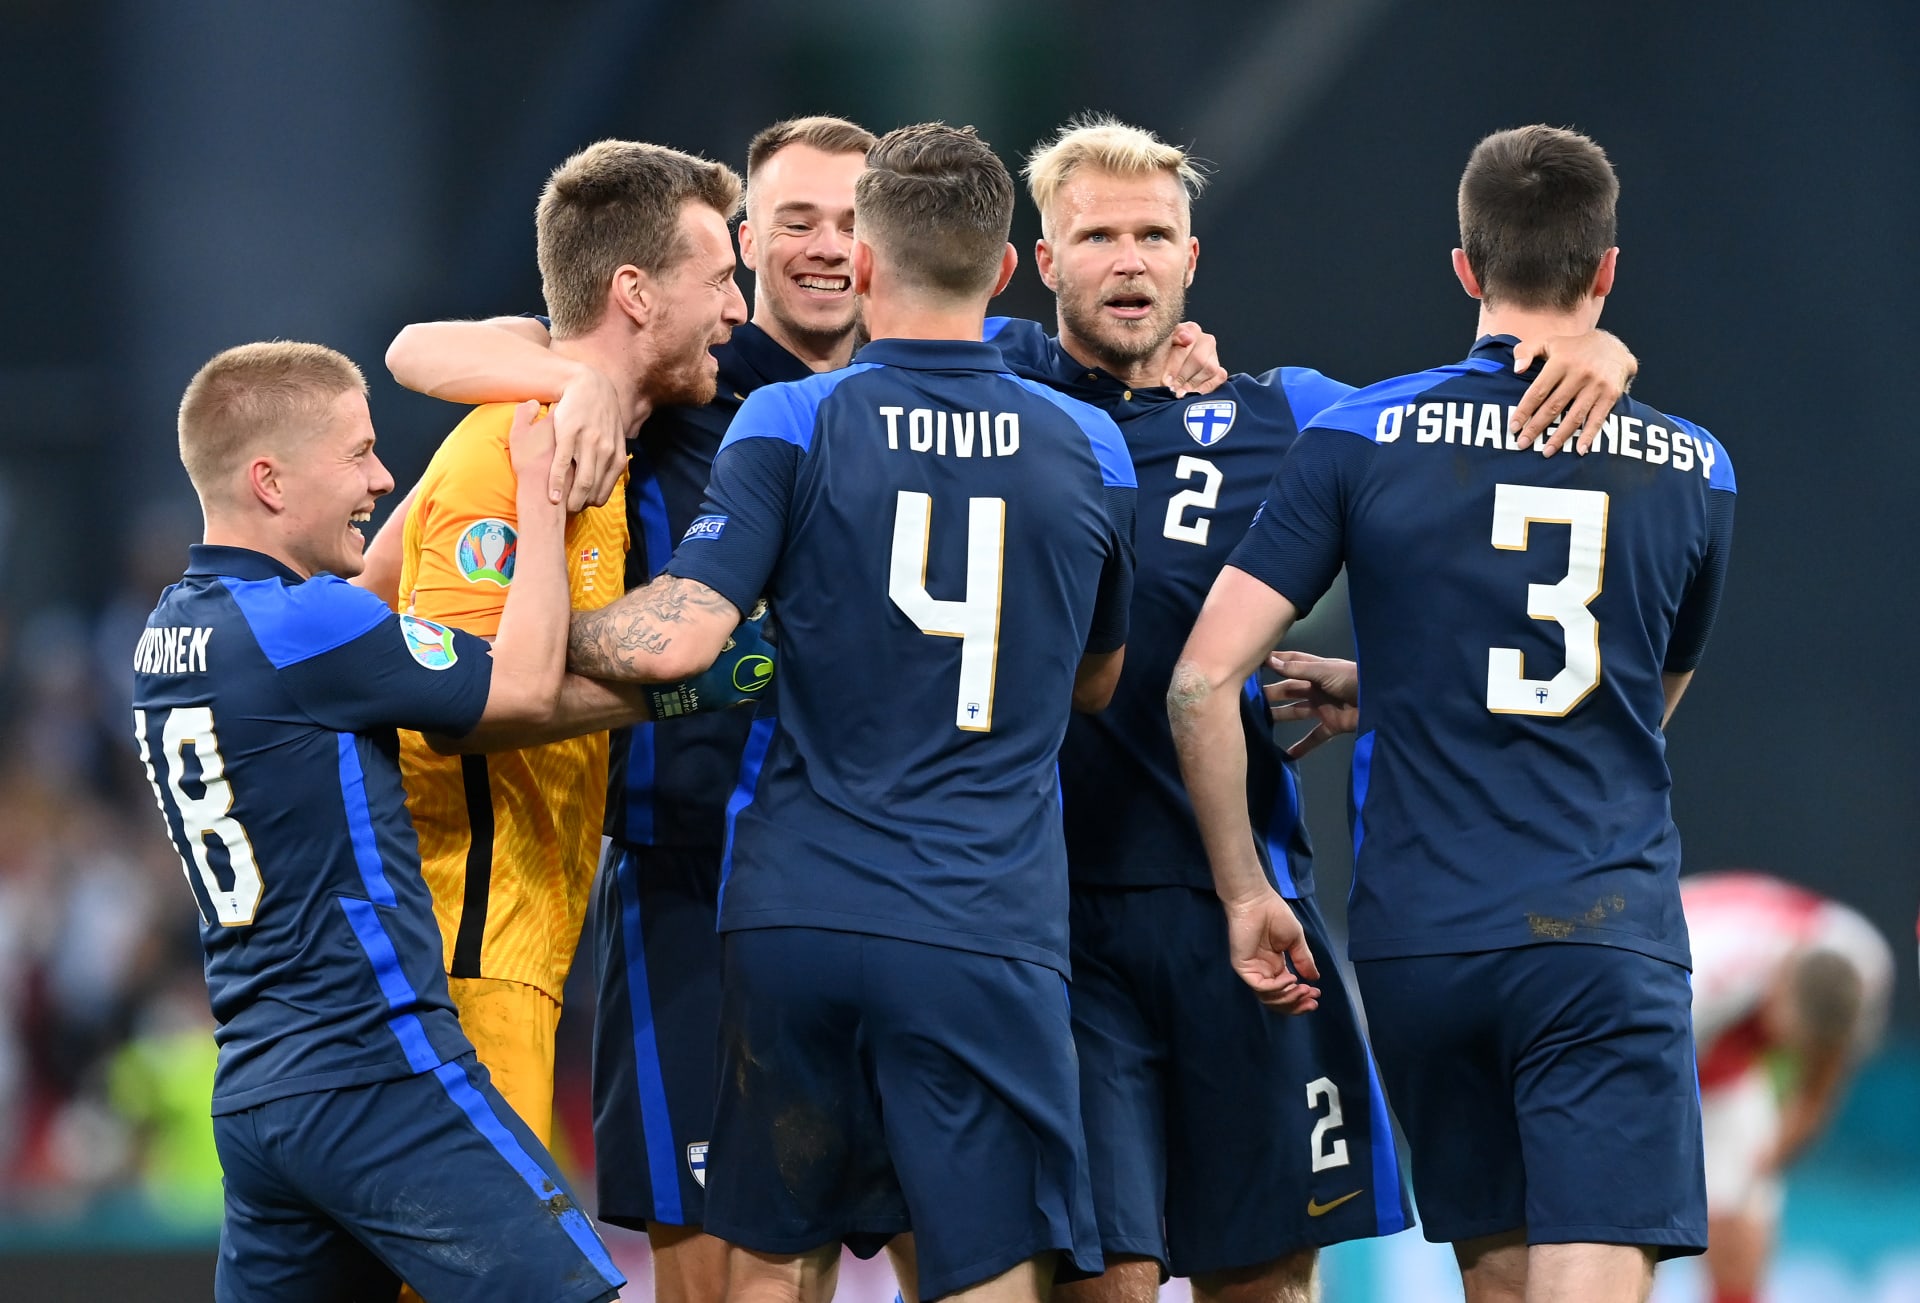 يورو 2020: فنلندا تفوز على الدنمارك بهدف نظيف بعد حادث درامي 